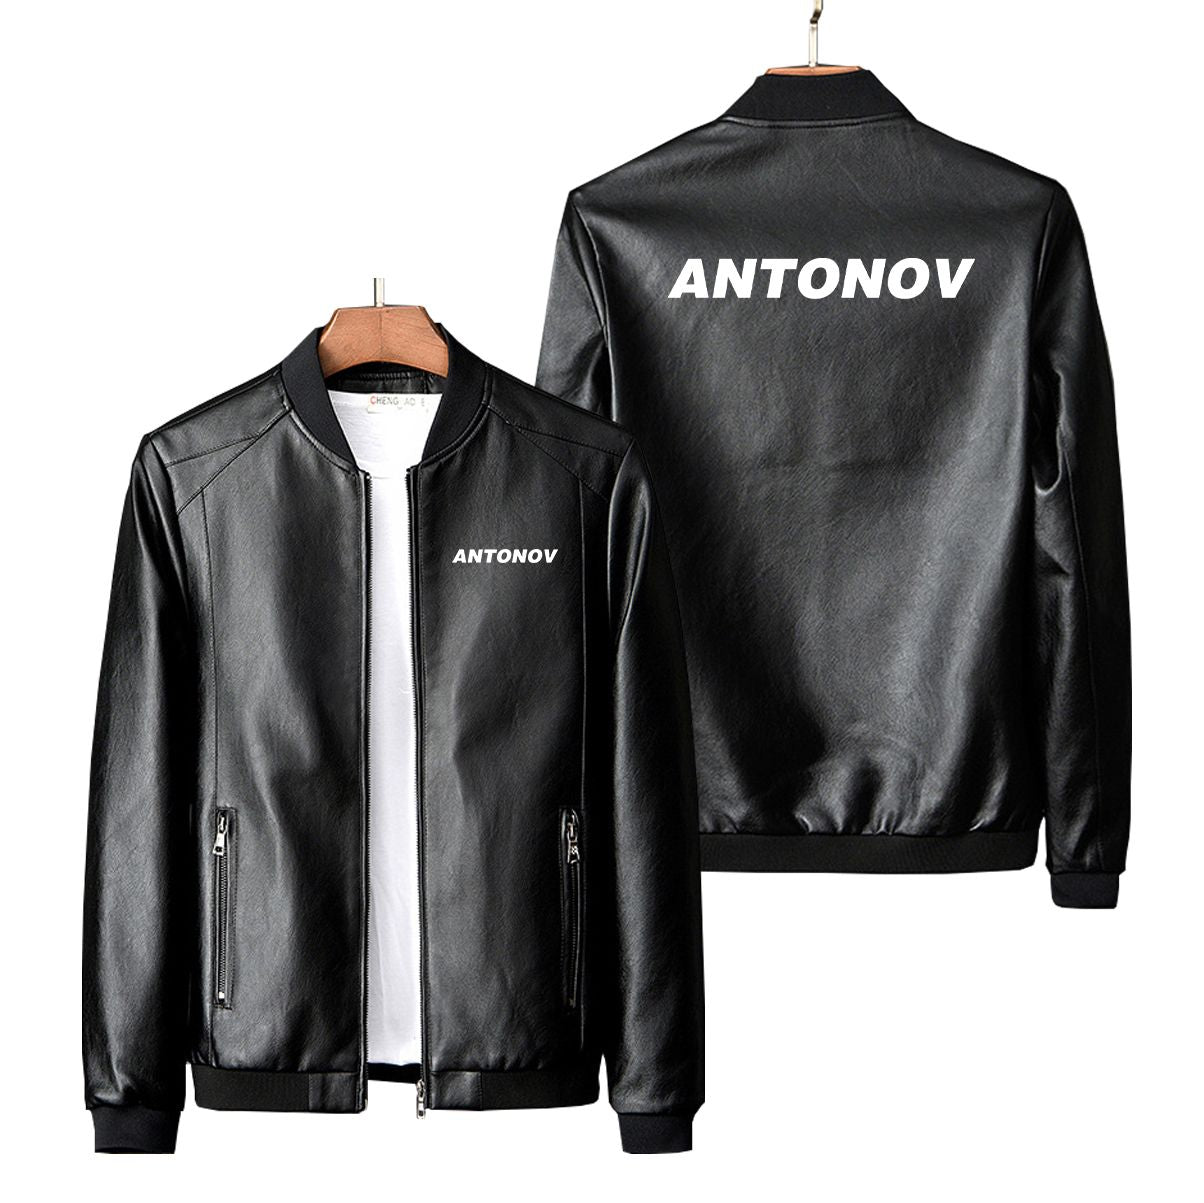 Antonov & Text Designed PU Leather Jackets